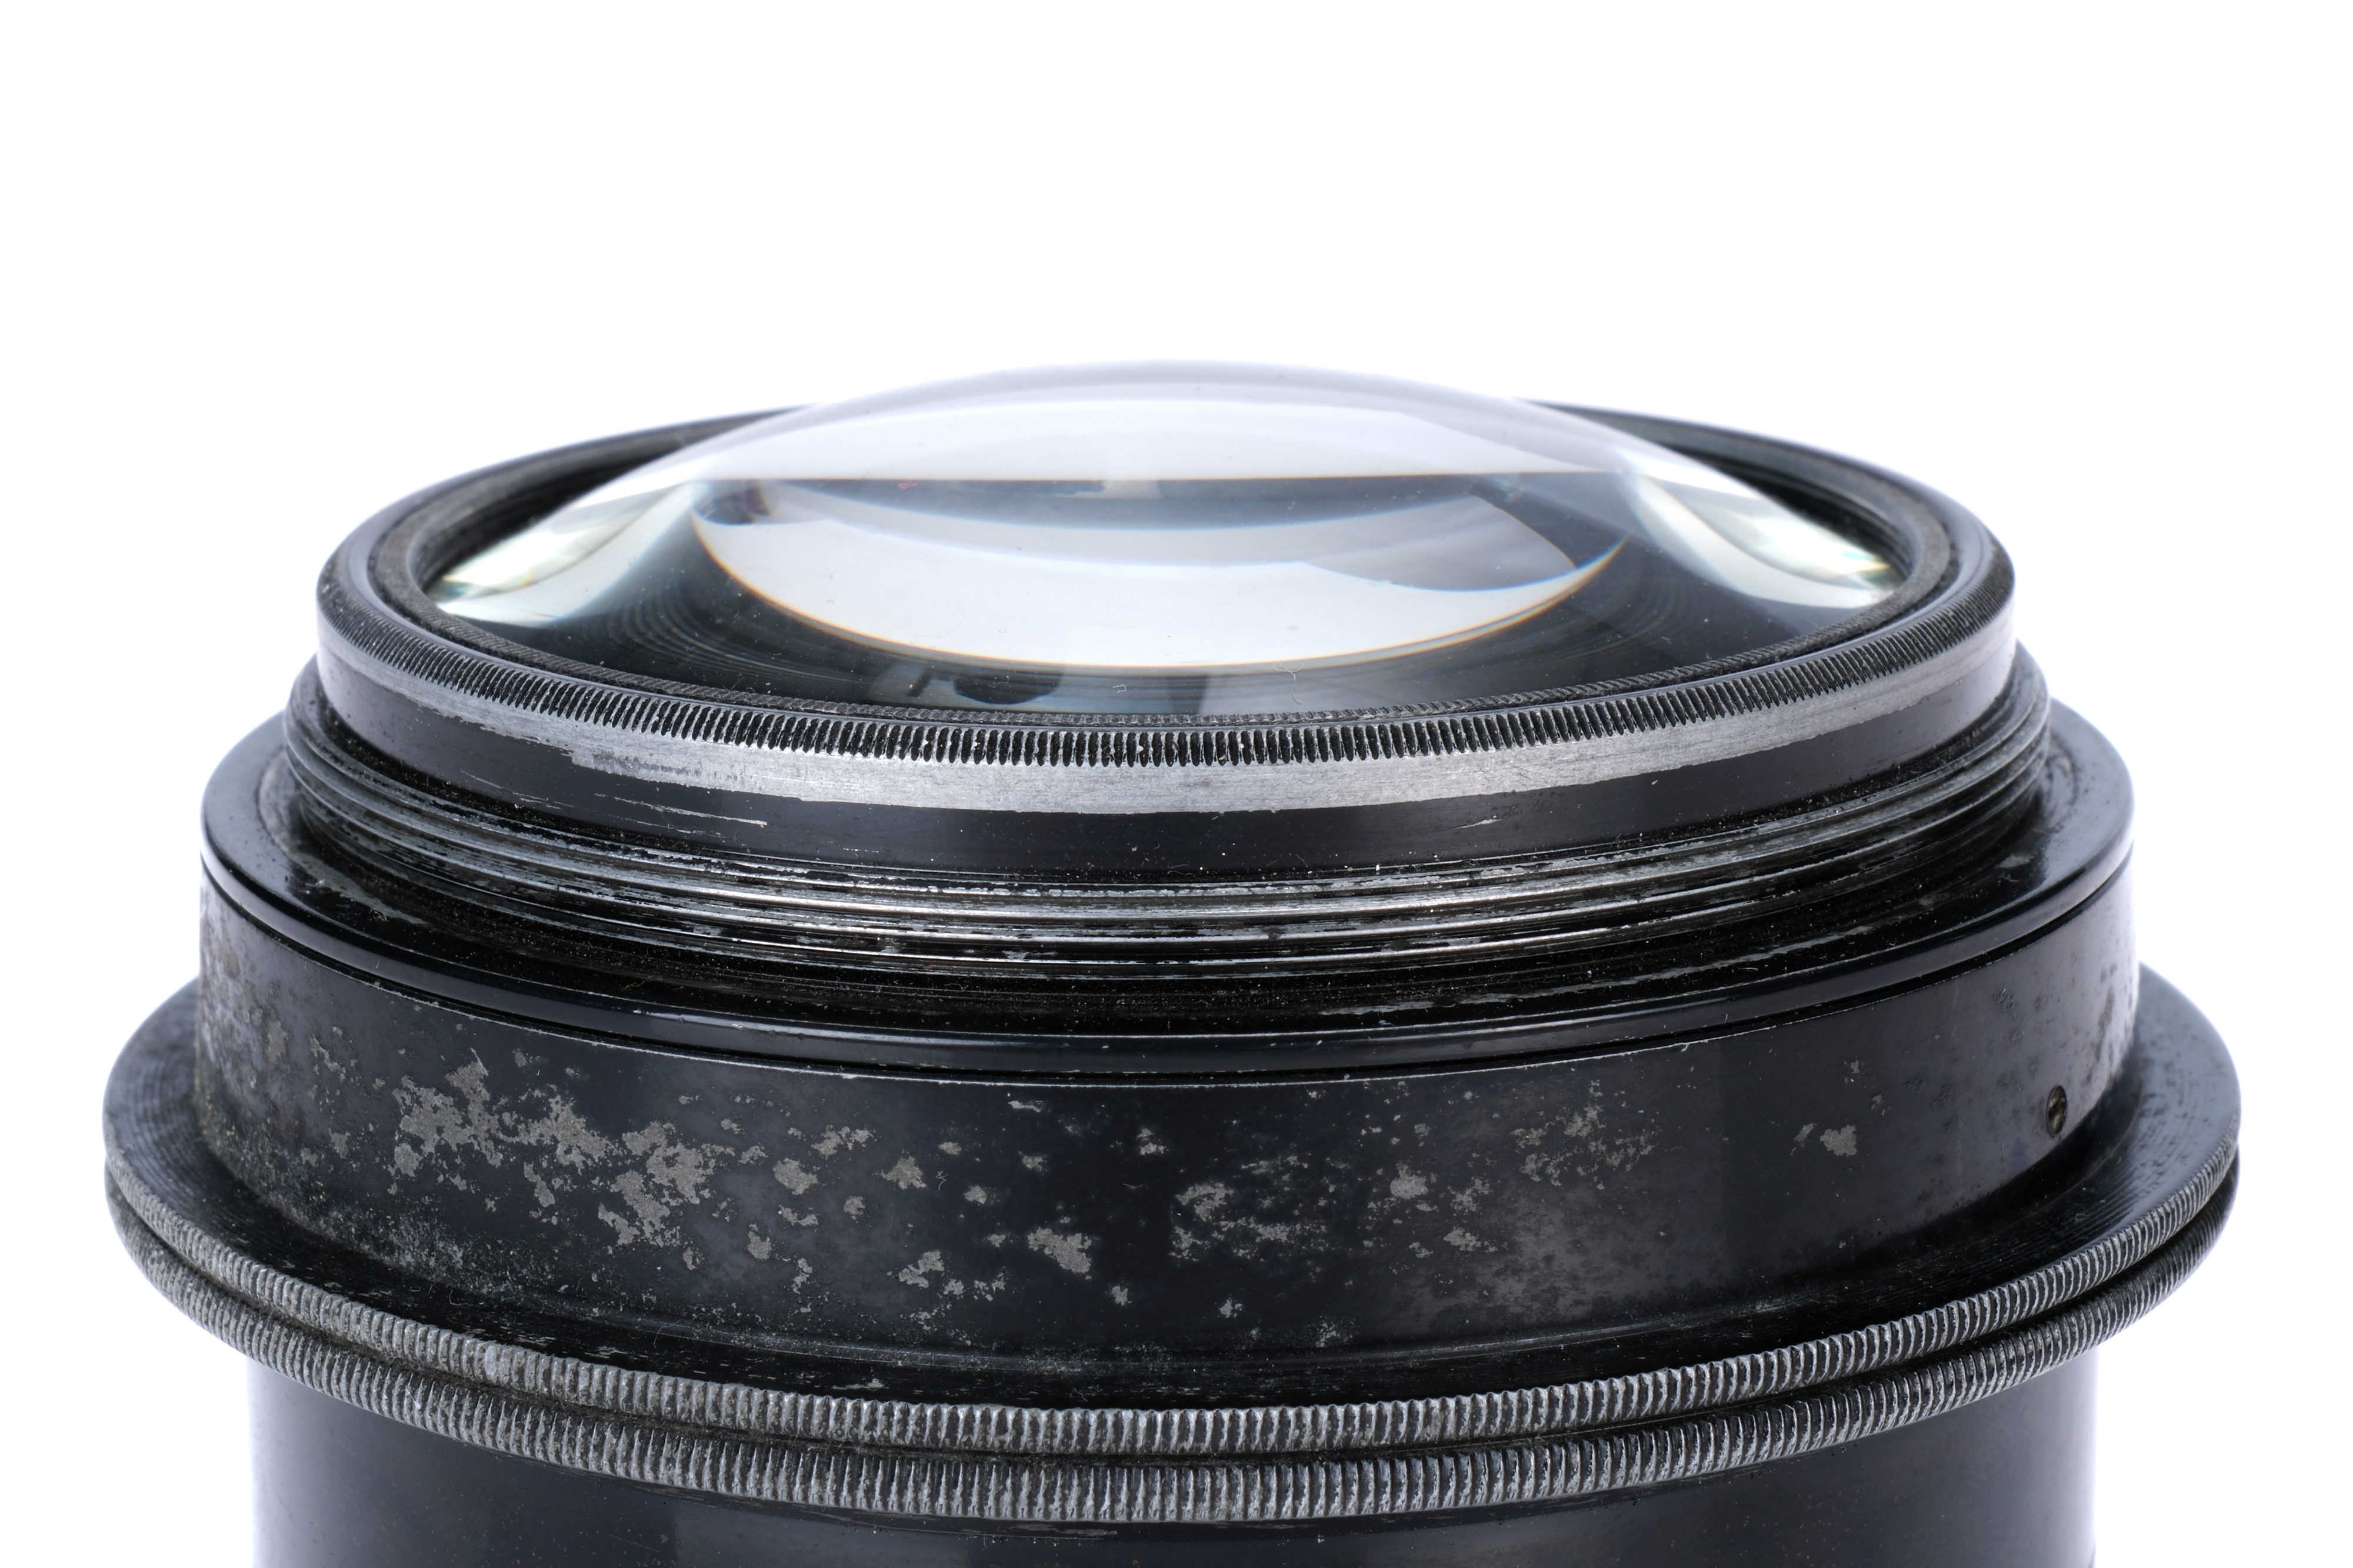 A Rietzchel Prolinear f/1.9 135mm Lens, - Image 4 of 6